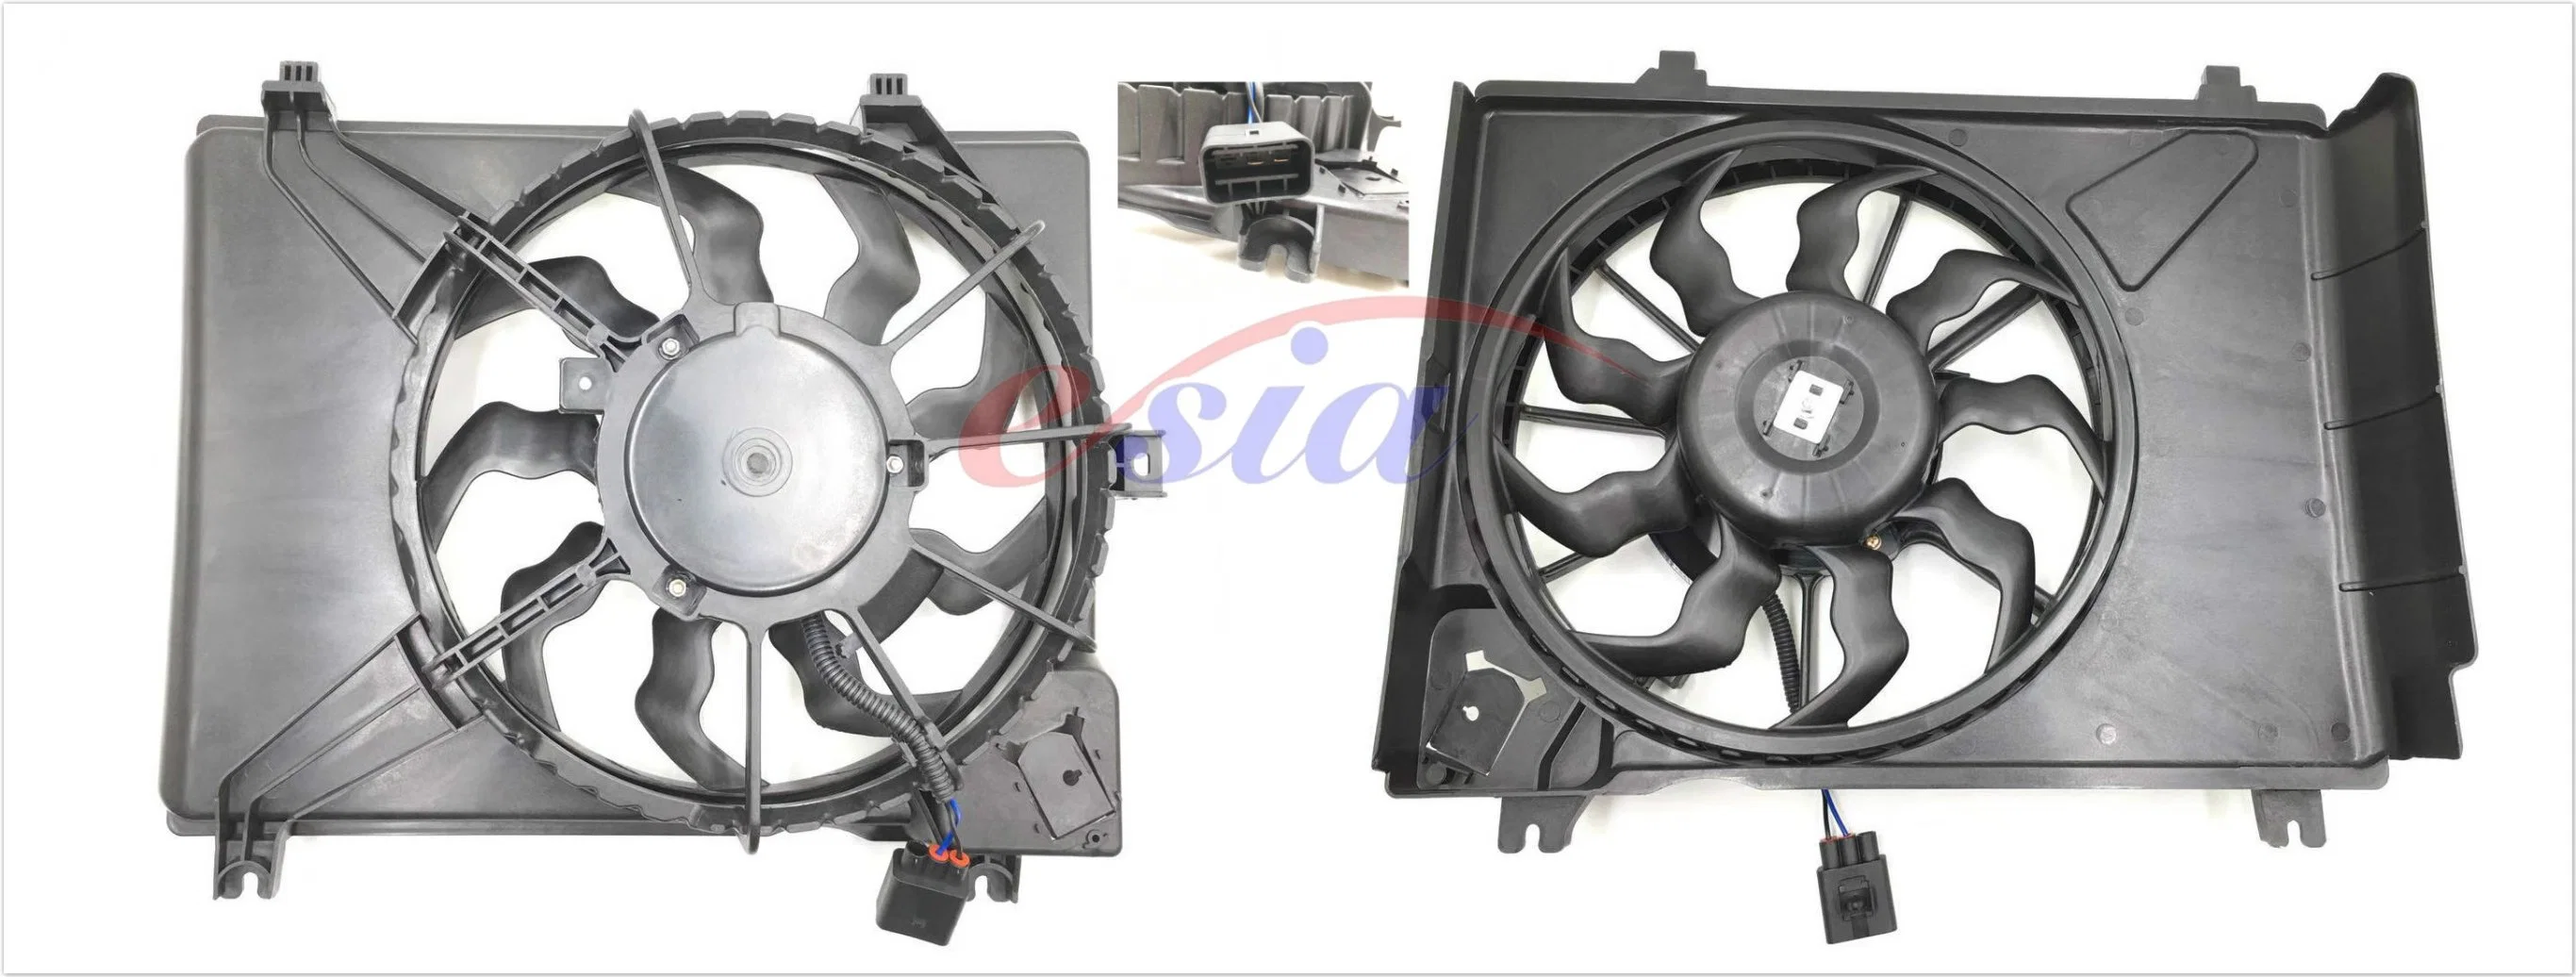 Auto Parts Ventilador de refrigeración del radiador para Hyundai i10 2008-2010 25380-025380-2X300, X000, X050 25380-071x55x47mm